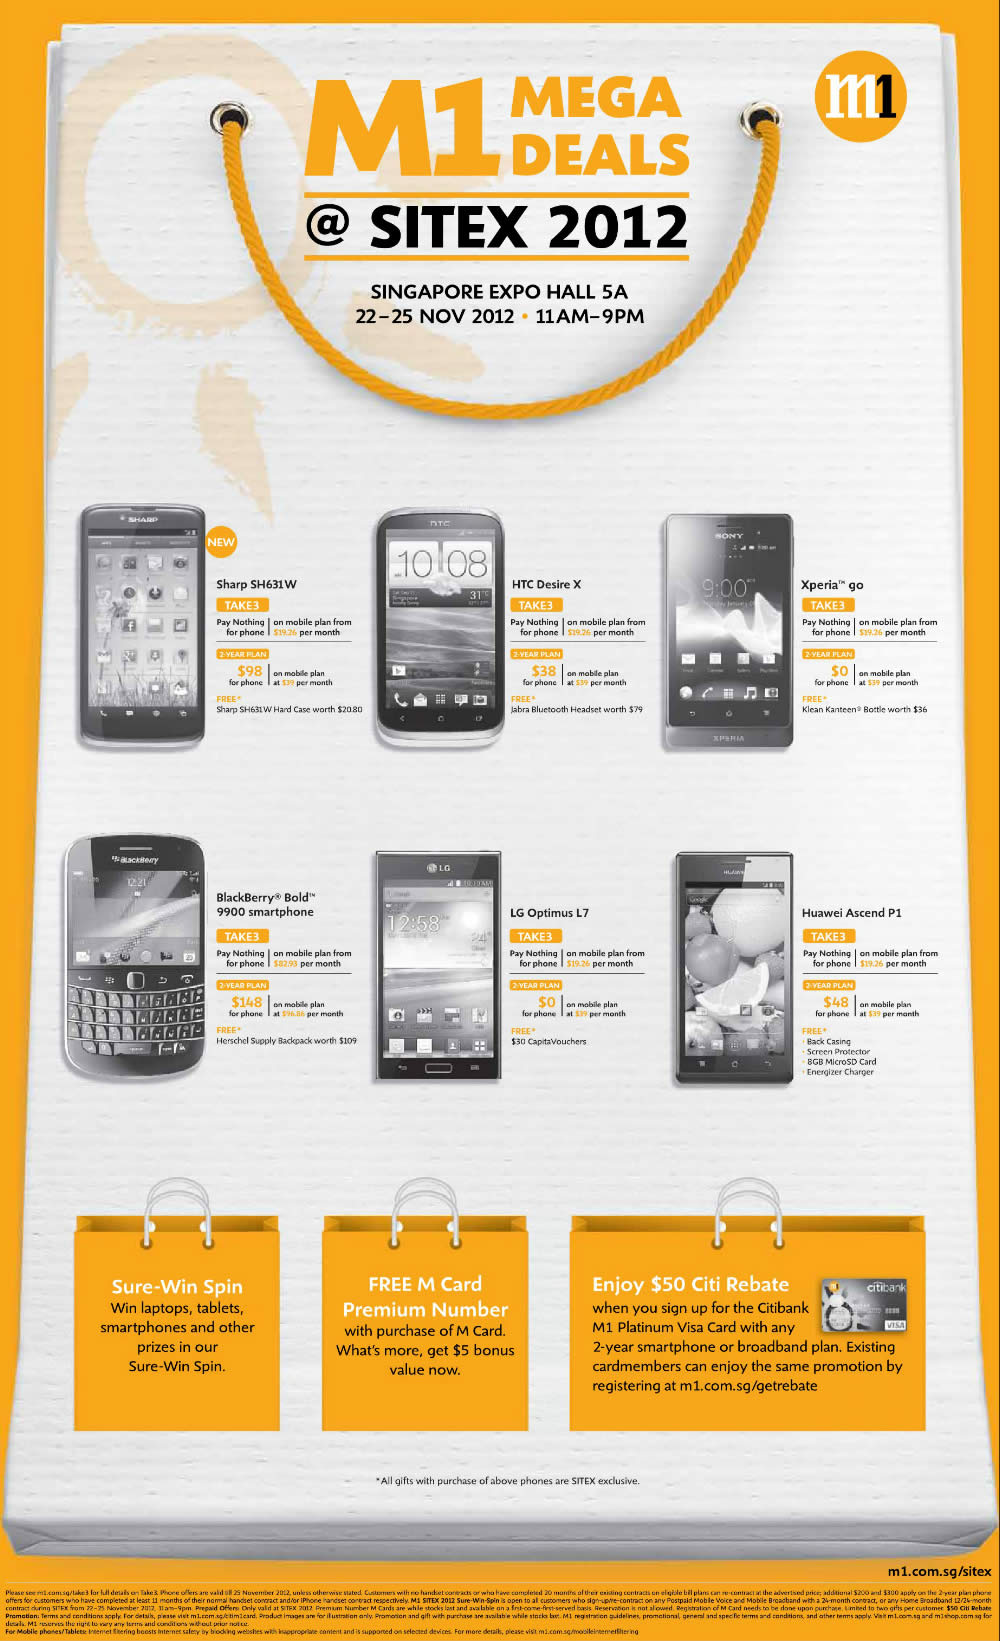 SITEX 2012 price list image brochure of M1 Mobile Phones Sharp SH631W, HTC Desire X, Sony Xperia Go, Blackberry Bold 9900, LG Optimus L7, Huawei Ascend P1